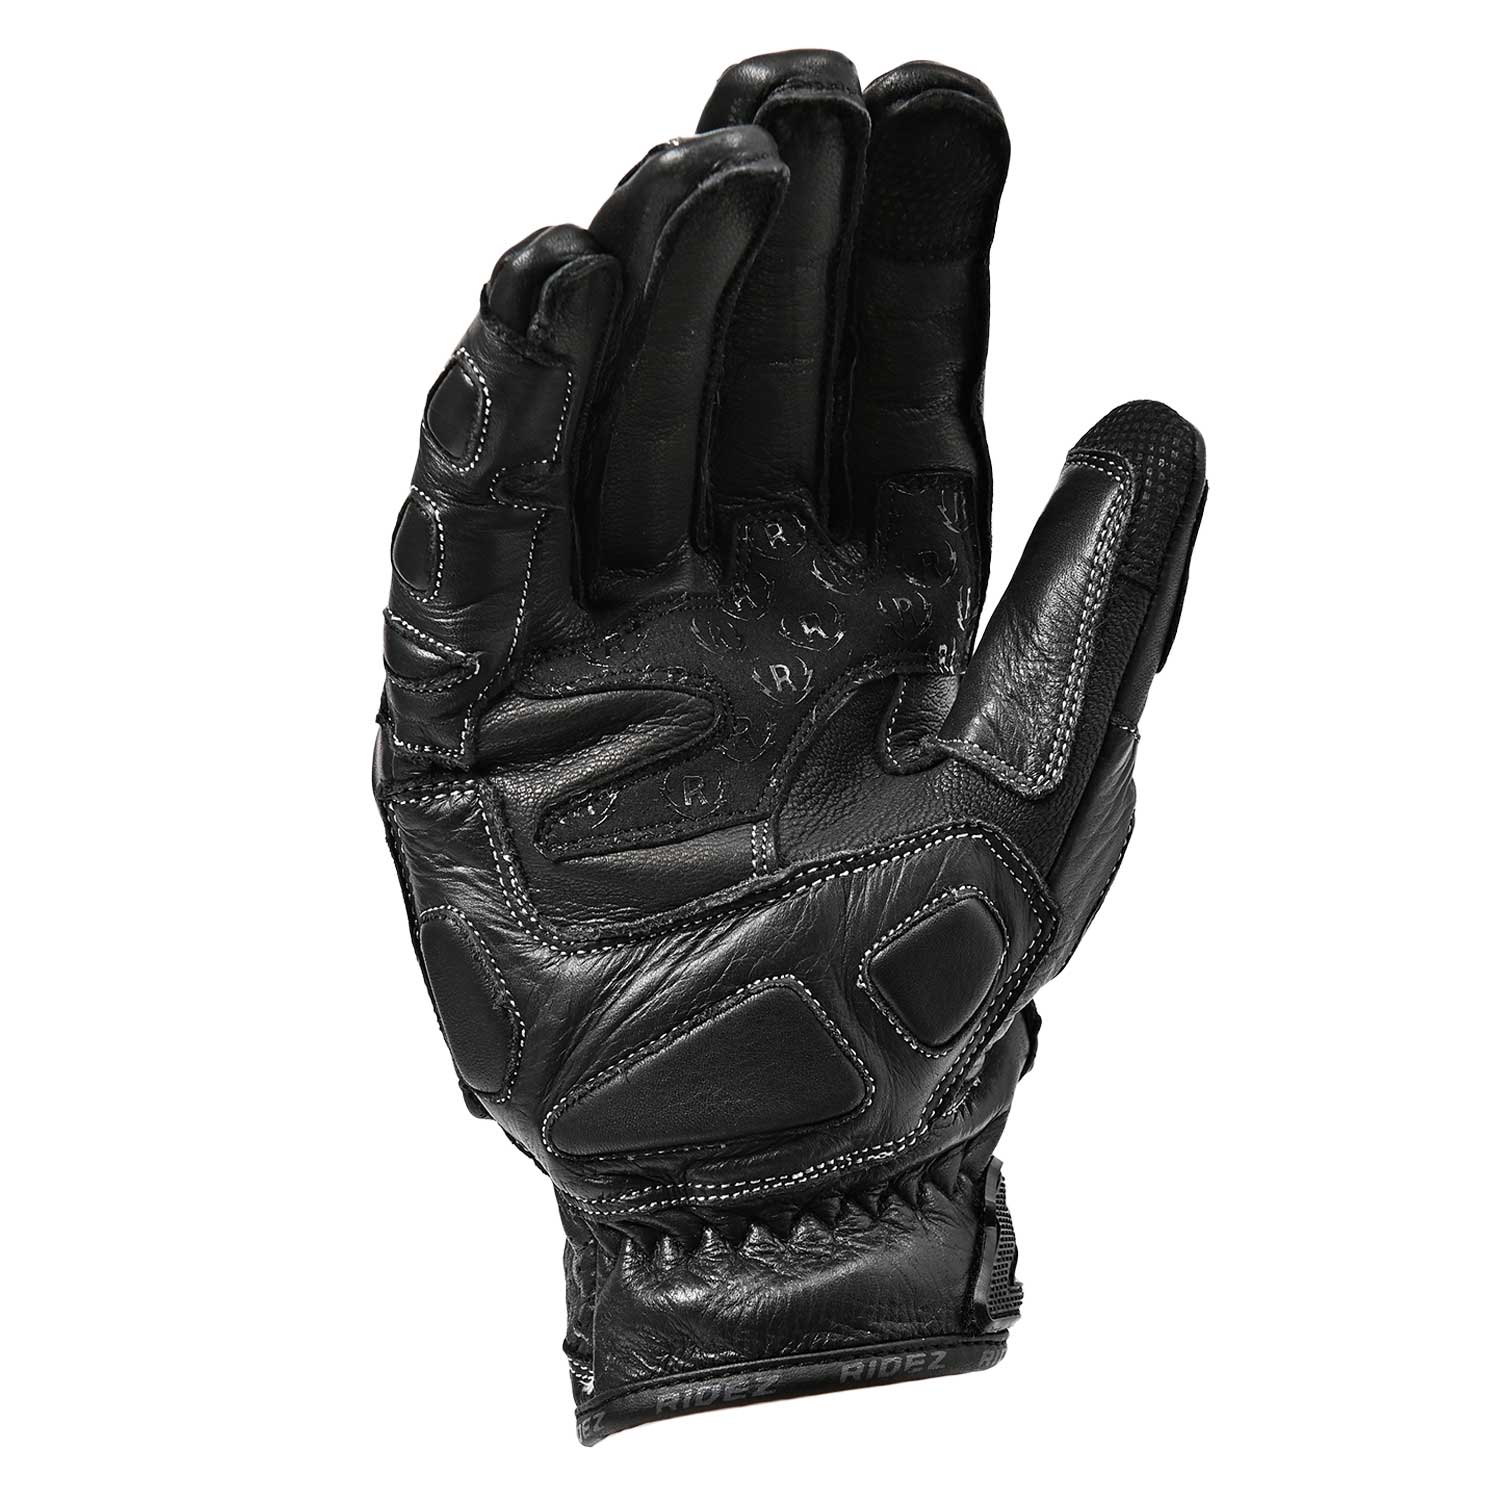 RIDEZ OCTANE GLOVE BLACK Motorcycle Short Gloves 